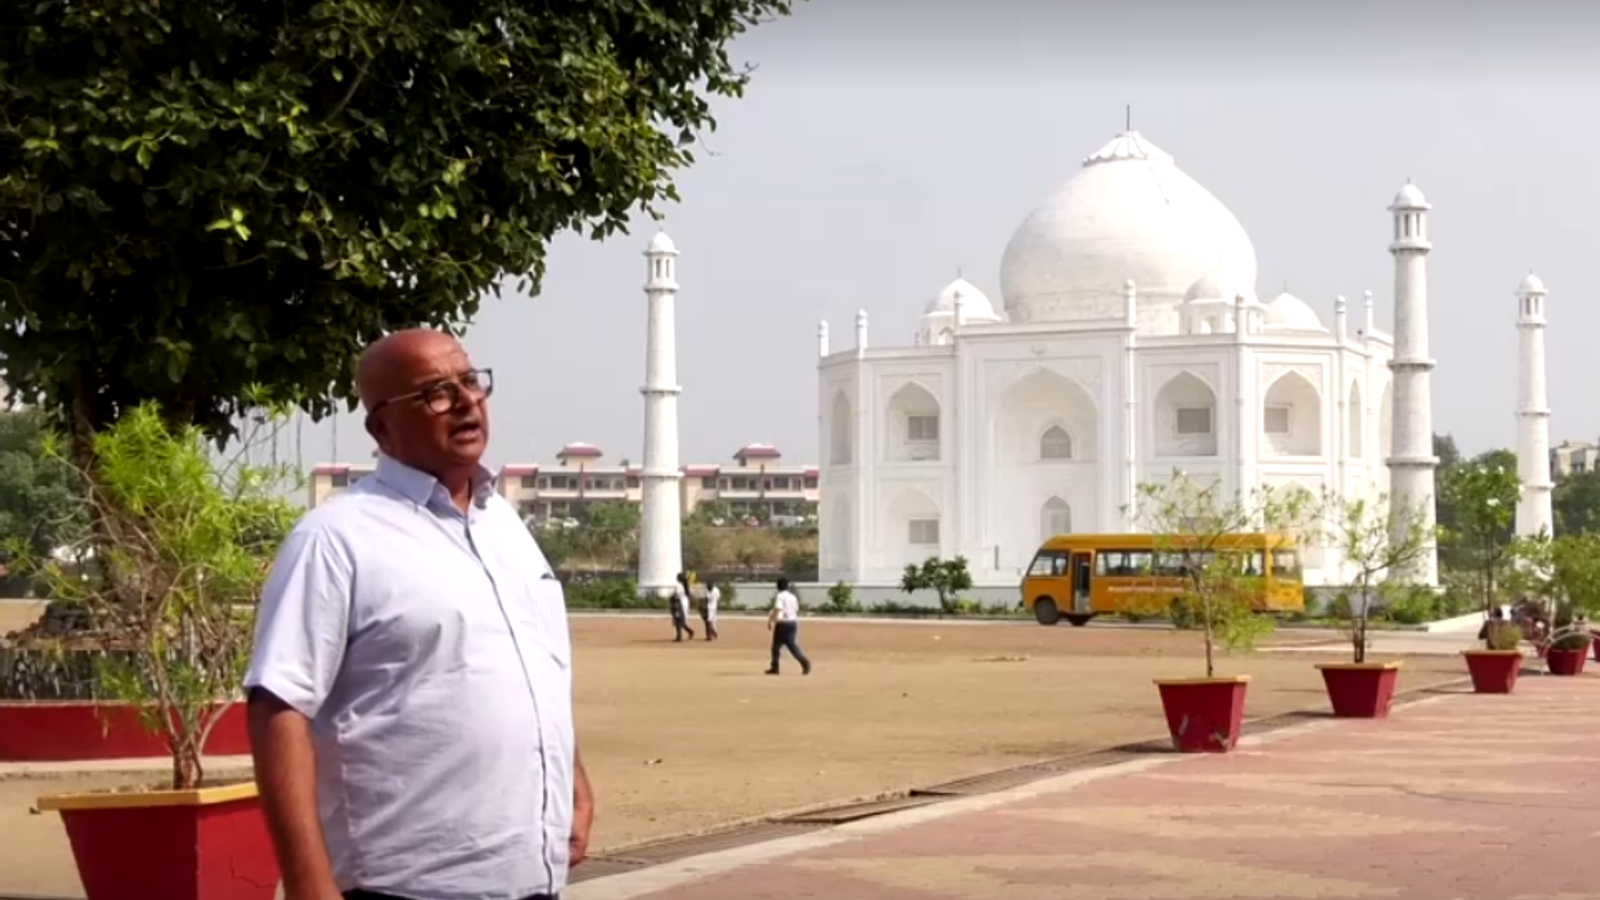 Guru India membuat replika Taj Mahal senilai £195.000 sebagai simbol cinta untuk istrinya |  Berita Dunia